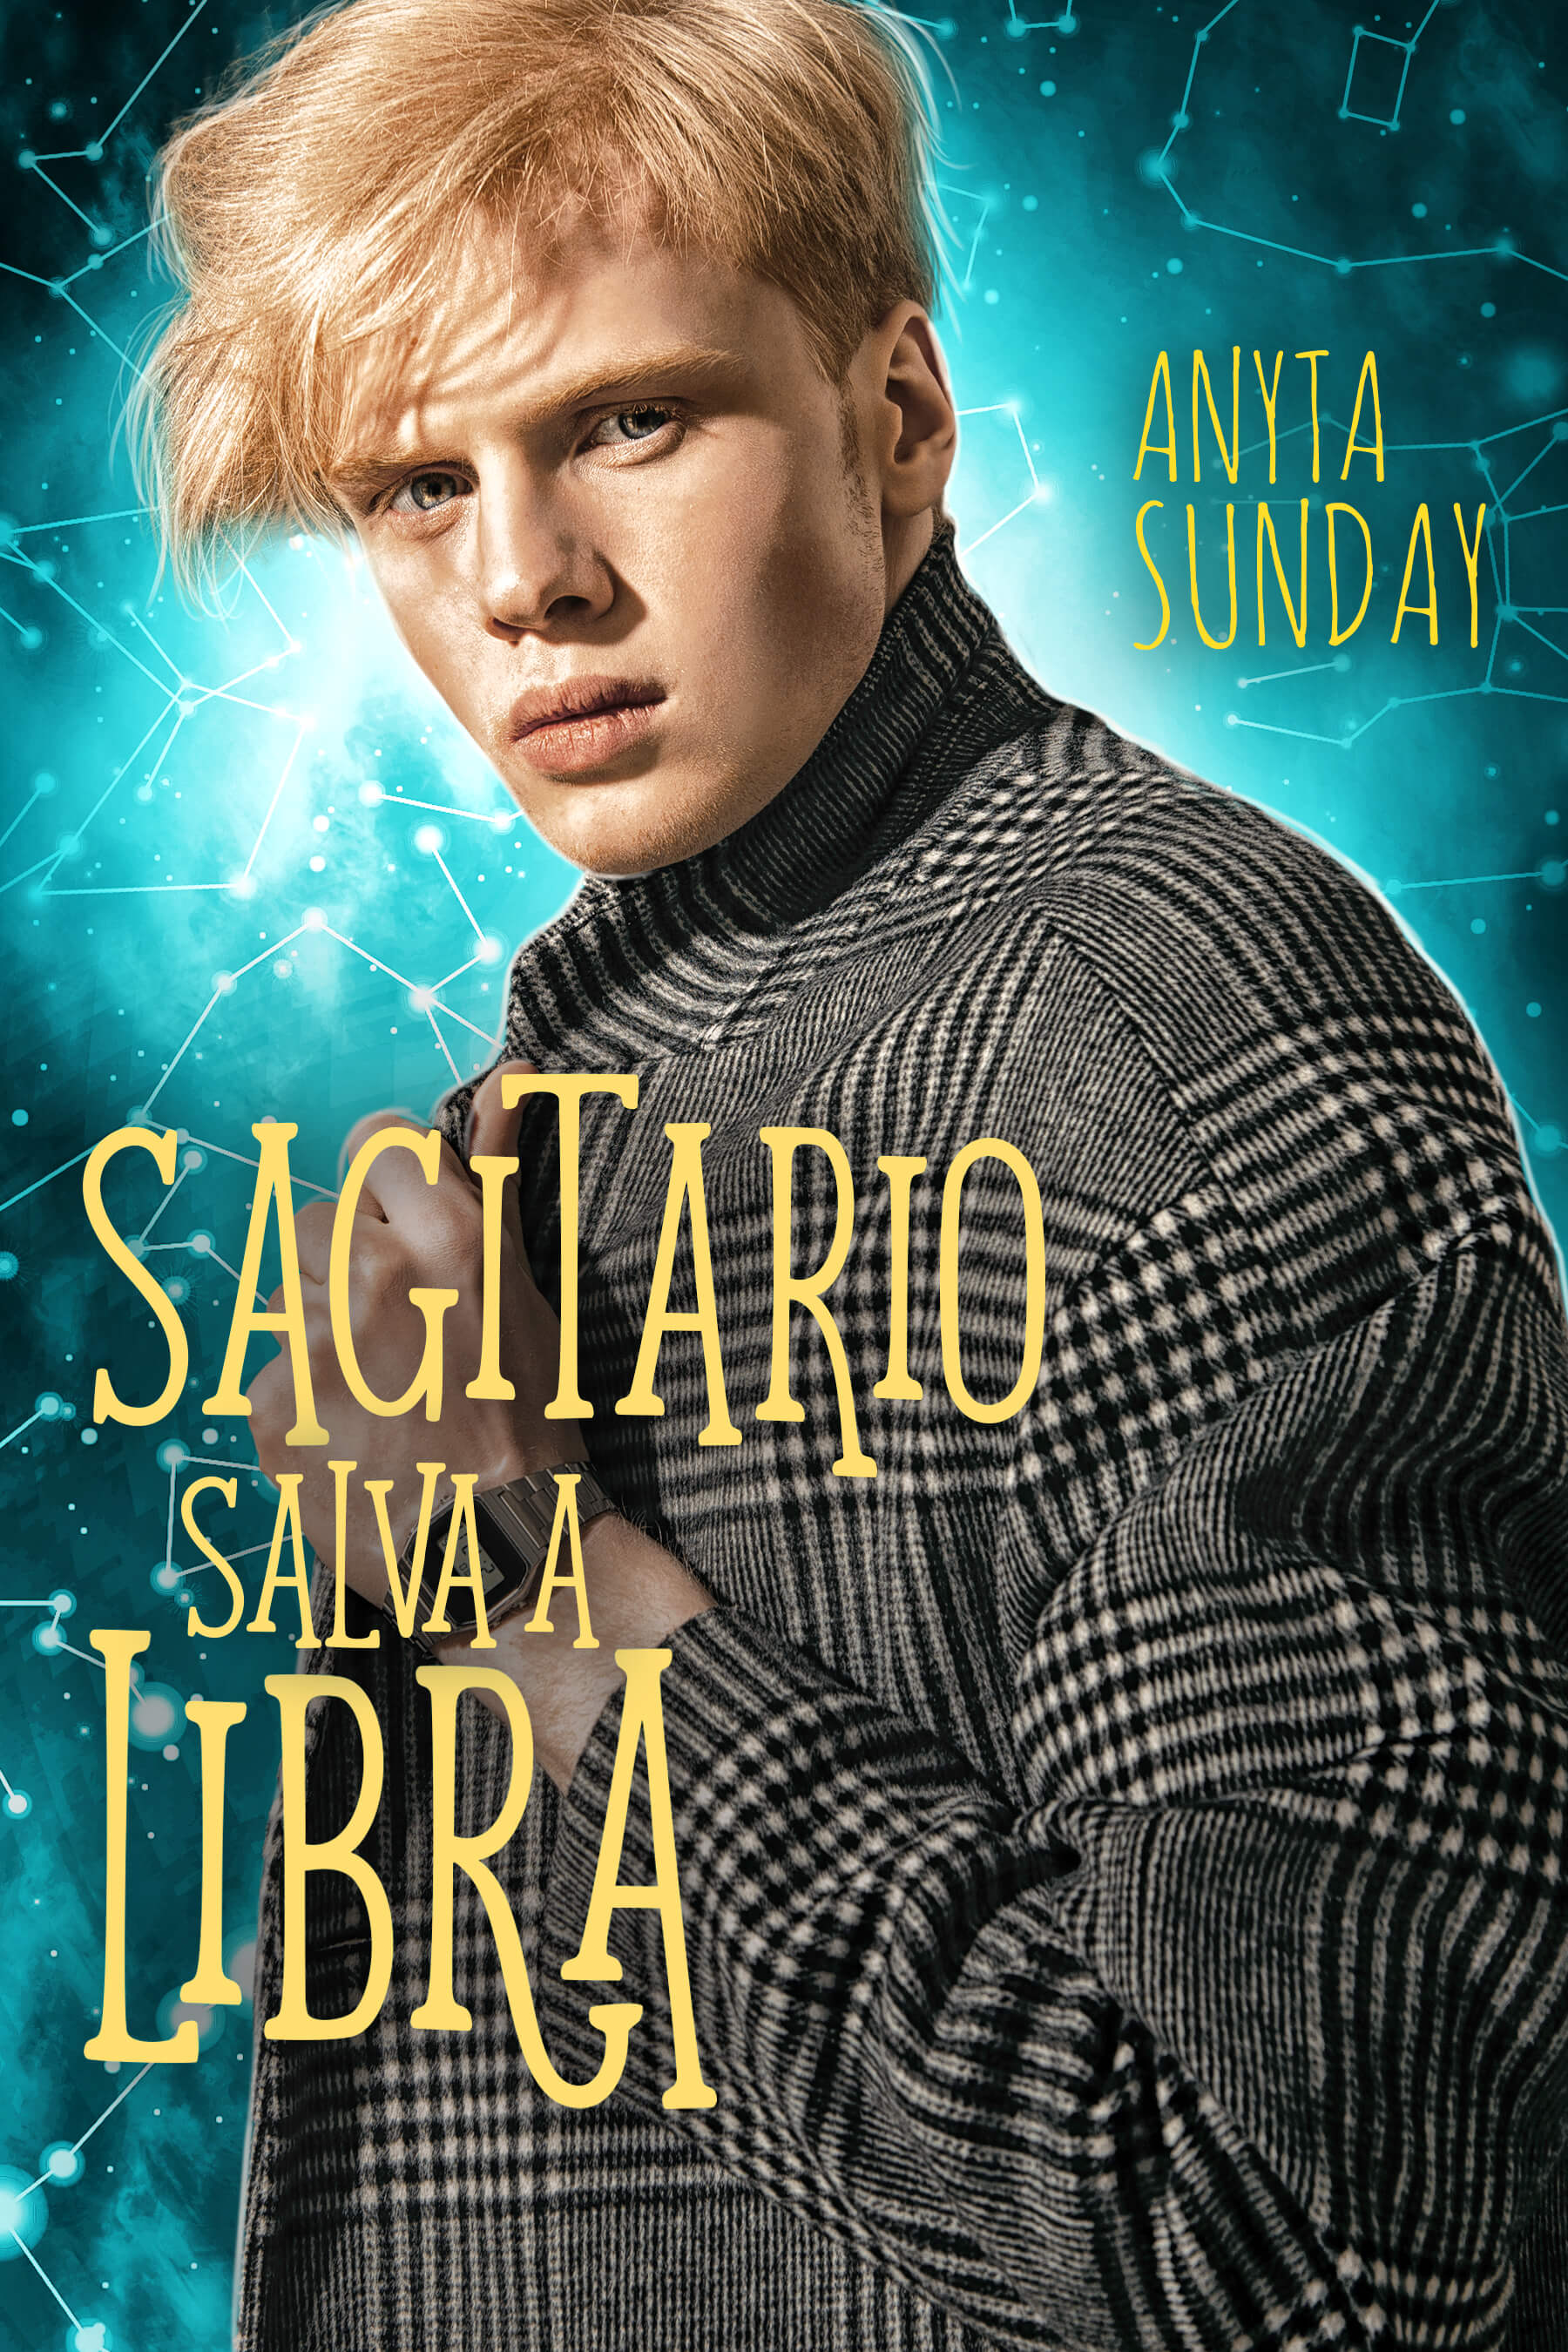 Sagittarius Saves Libra by Anyta Sunday, Spanish Edition